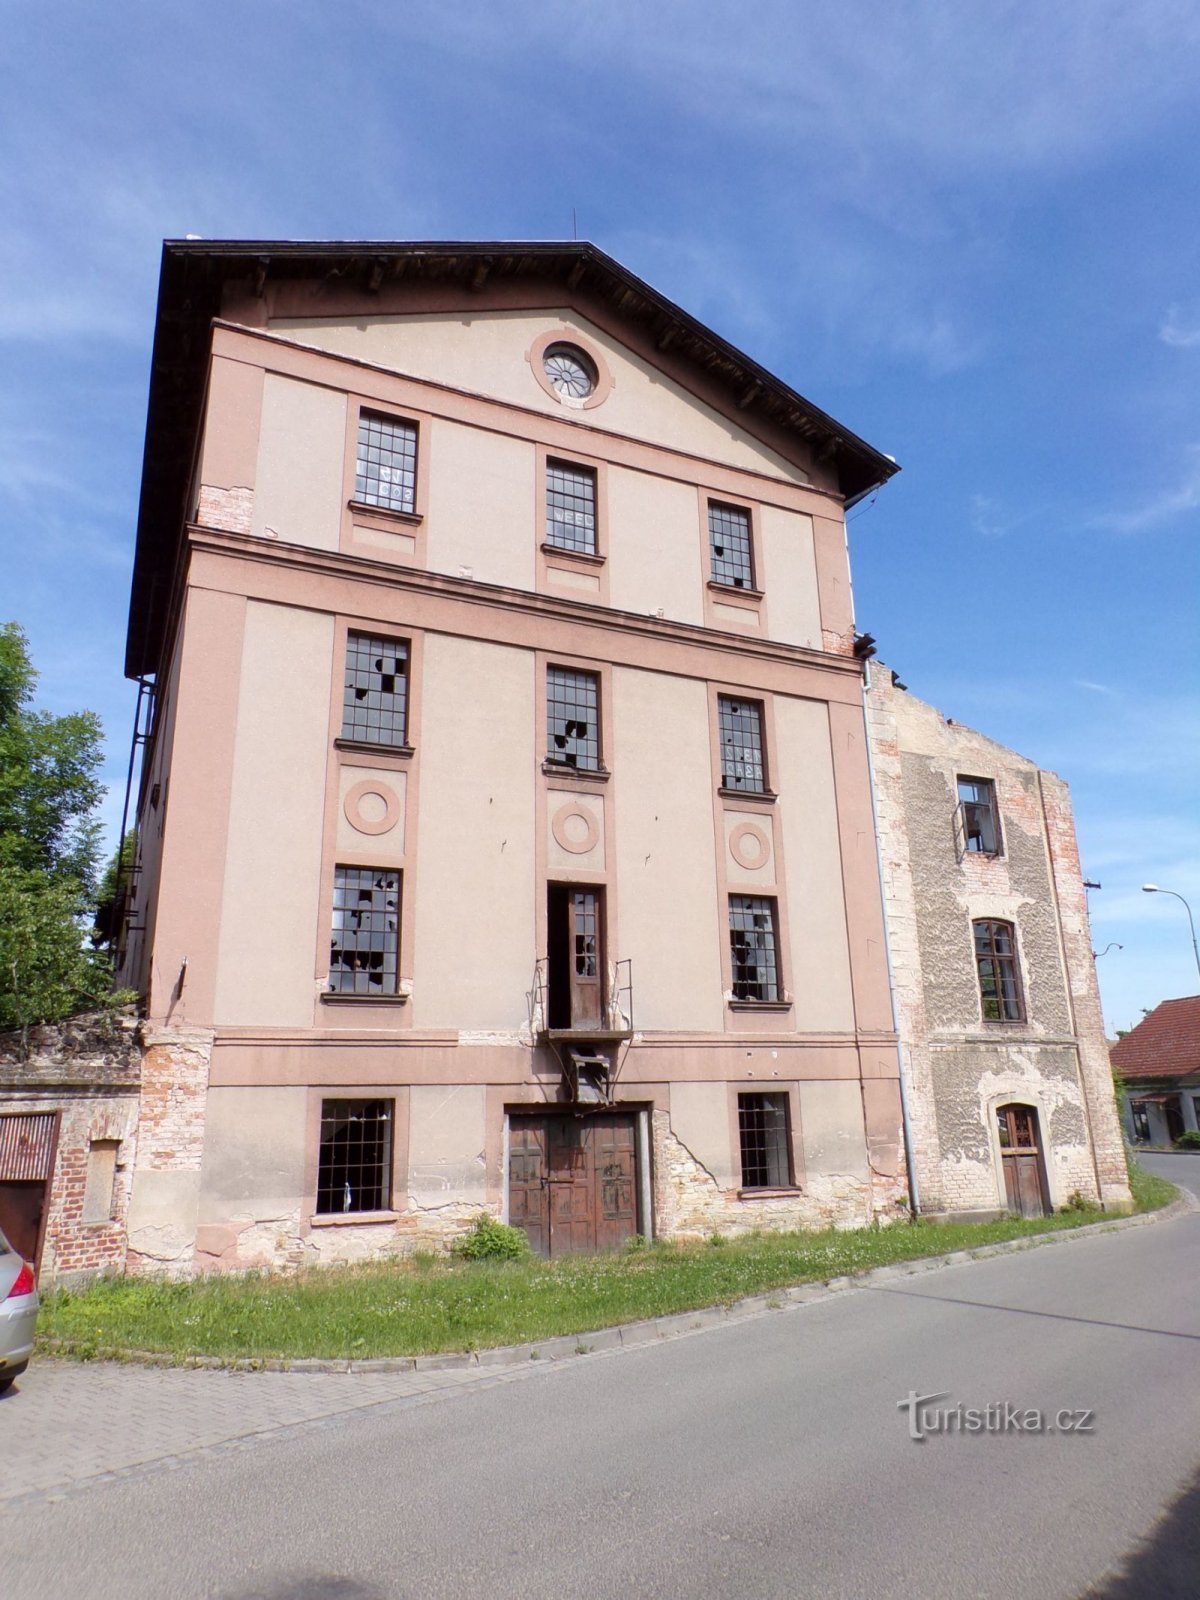 Hajnišův, trước đây là nhà máy Dotřelův (Třebechovice pod Orebem, 15.6.2021/XNUMX/XNUMX)